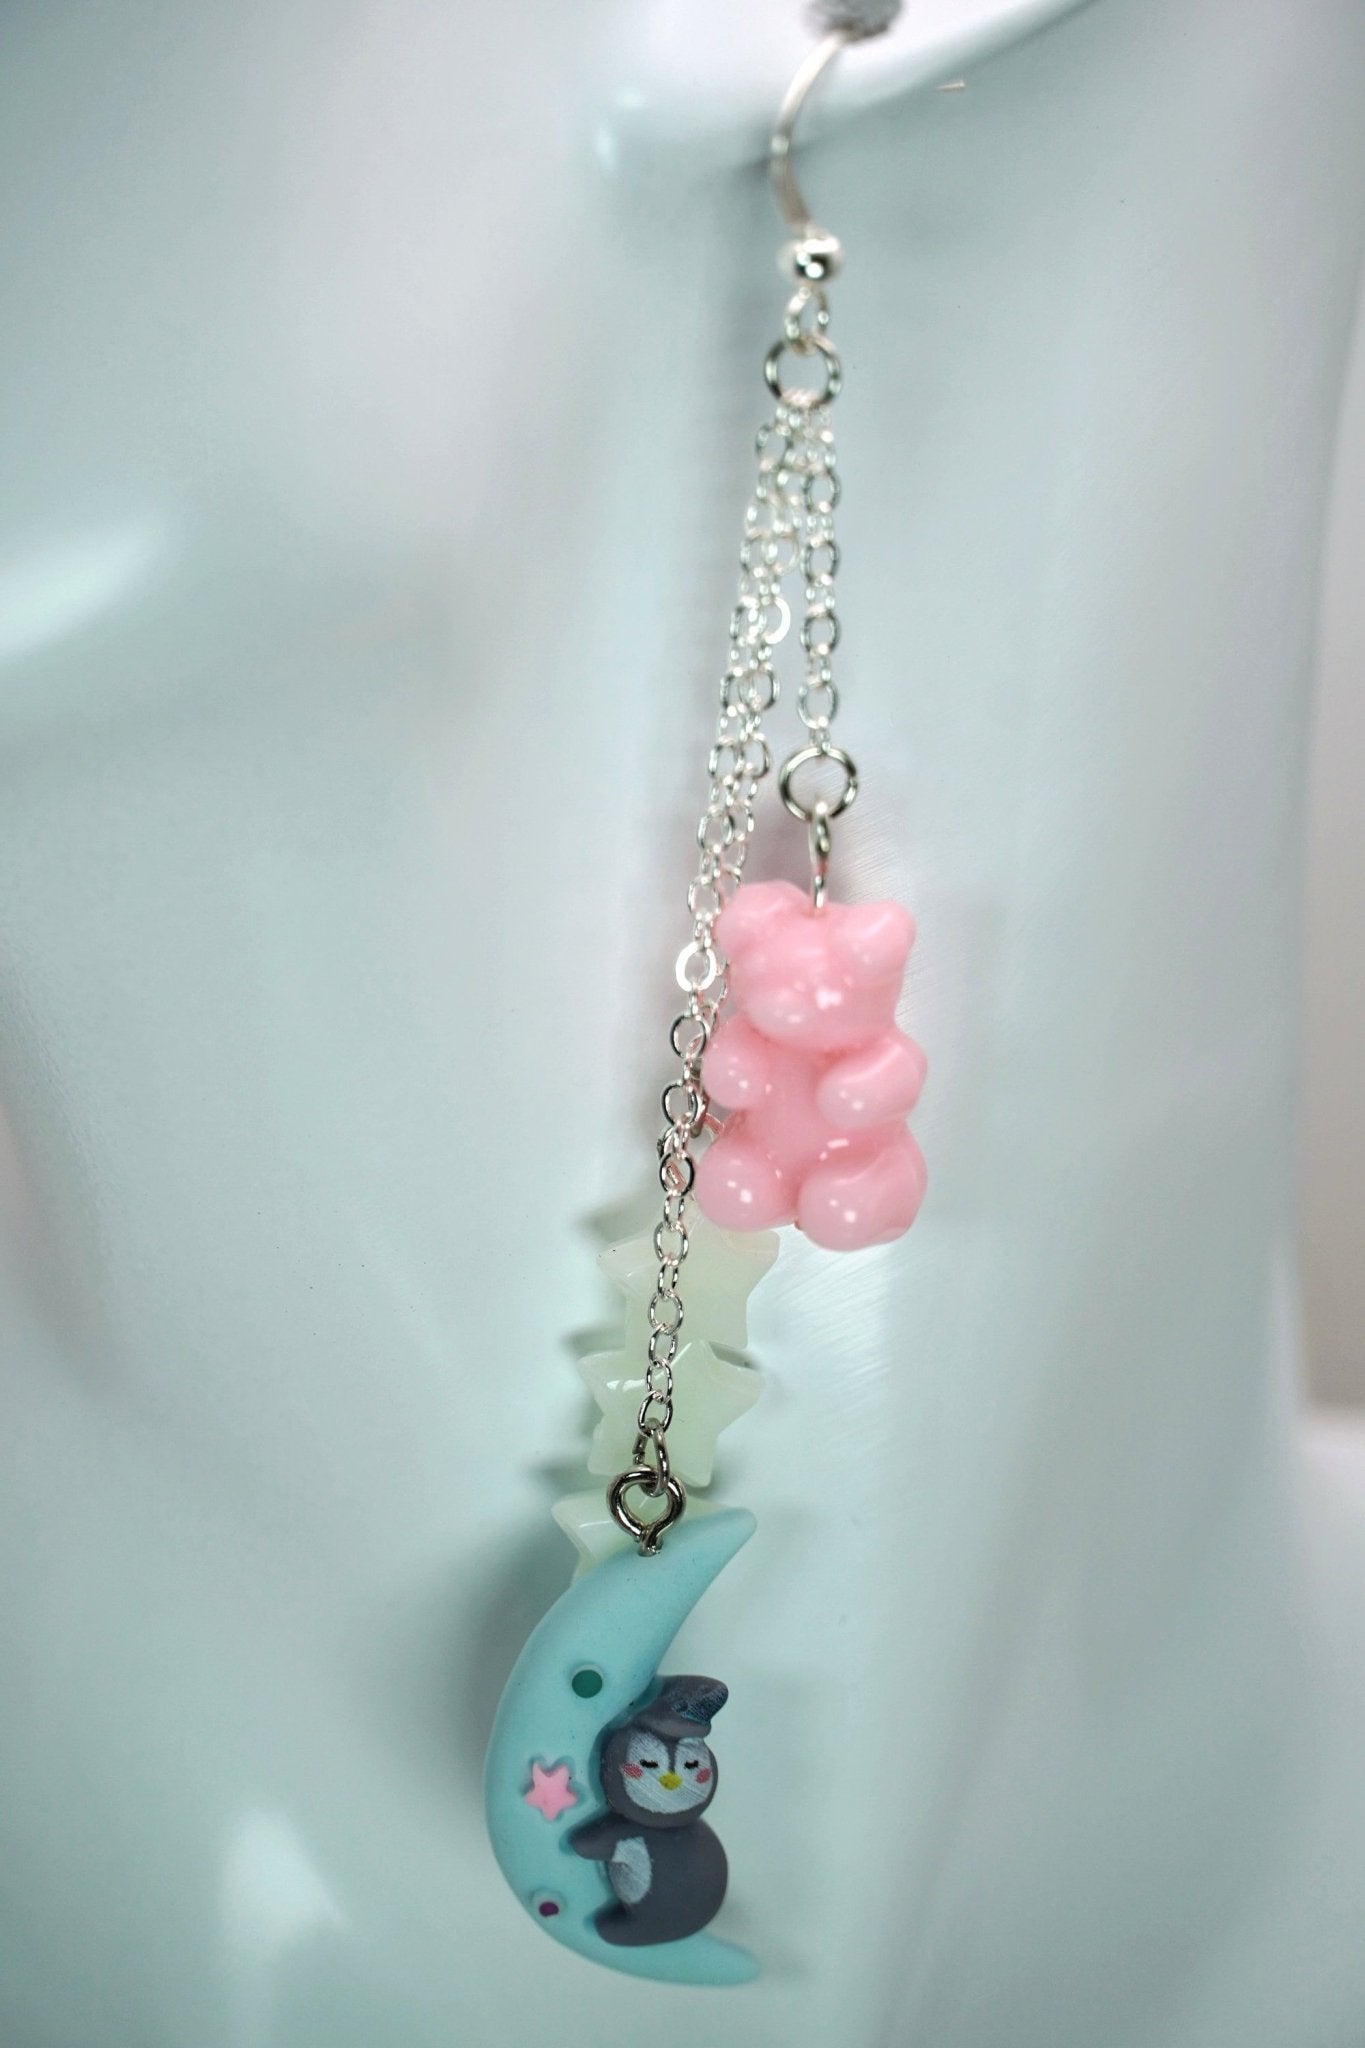 Trans Pride Earrings, Trans Flag Earrings with Sleeping Penguin Moon Charms, White Stars, and Pink Gummy Bears - Dekowaii Jewelry Company